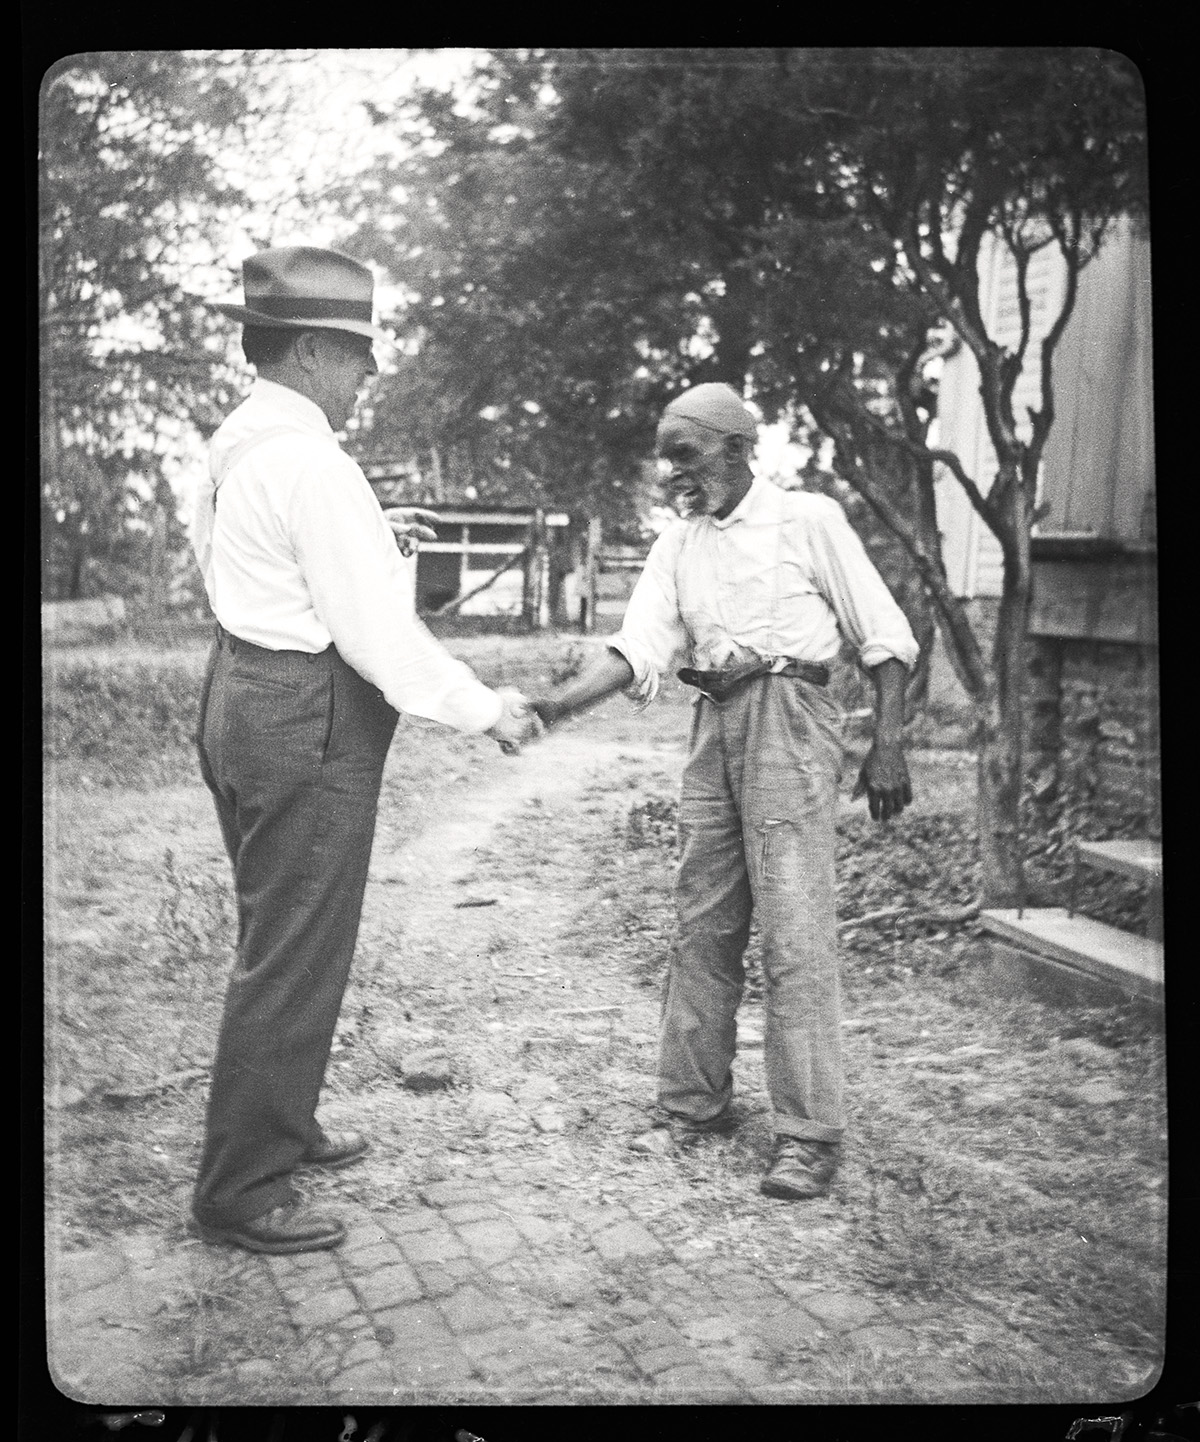 Two men shake hands along a path